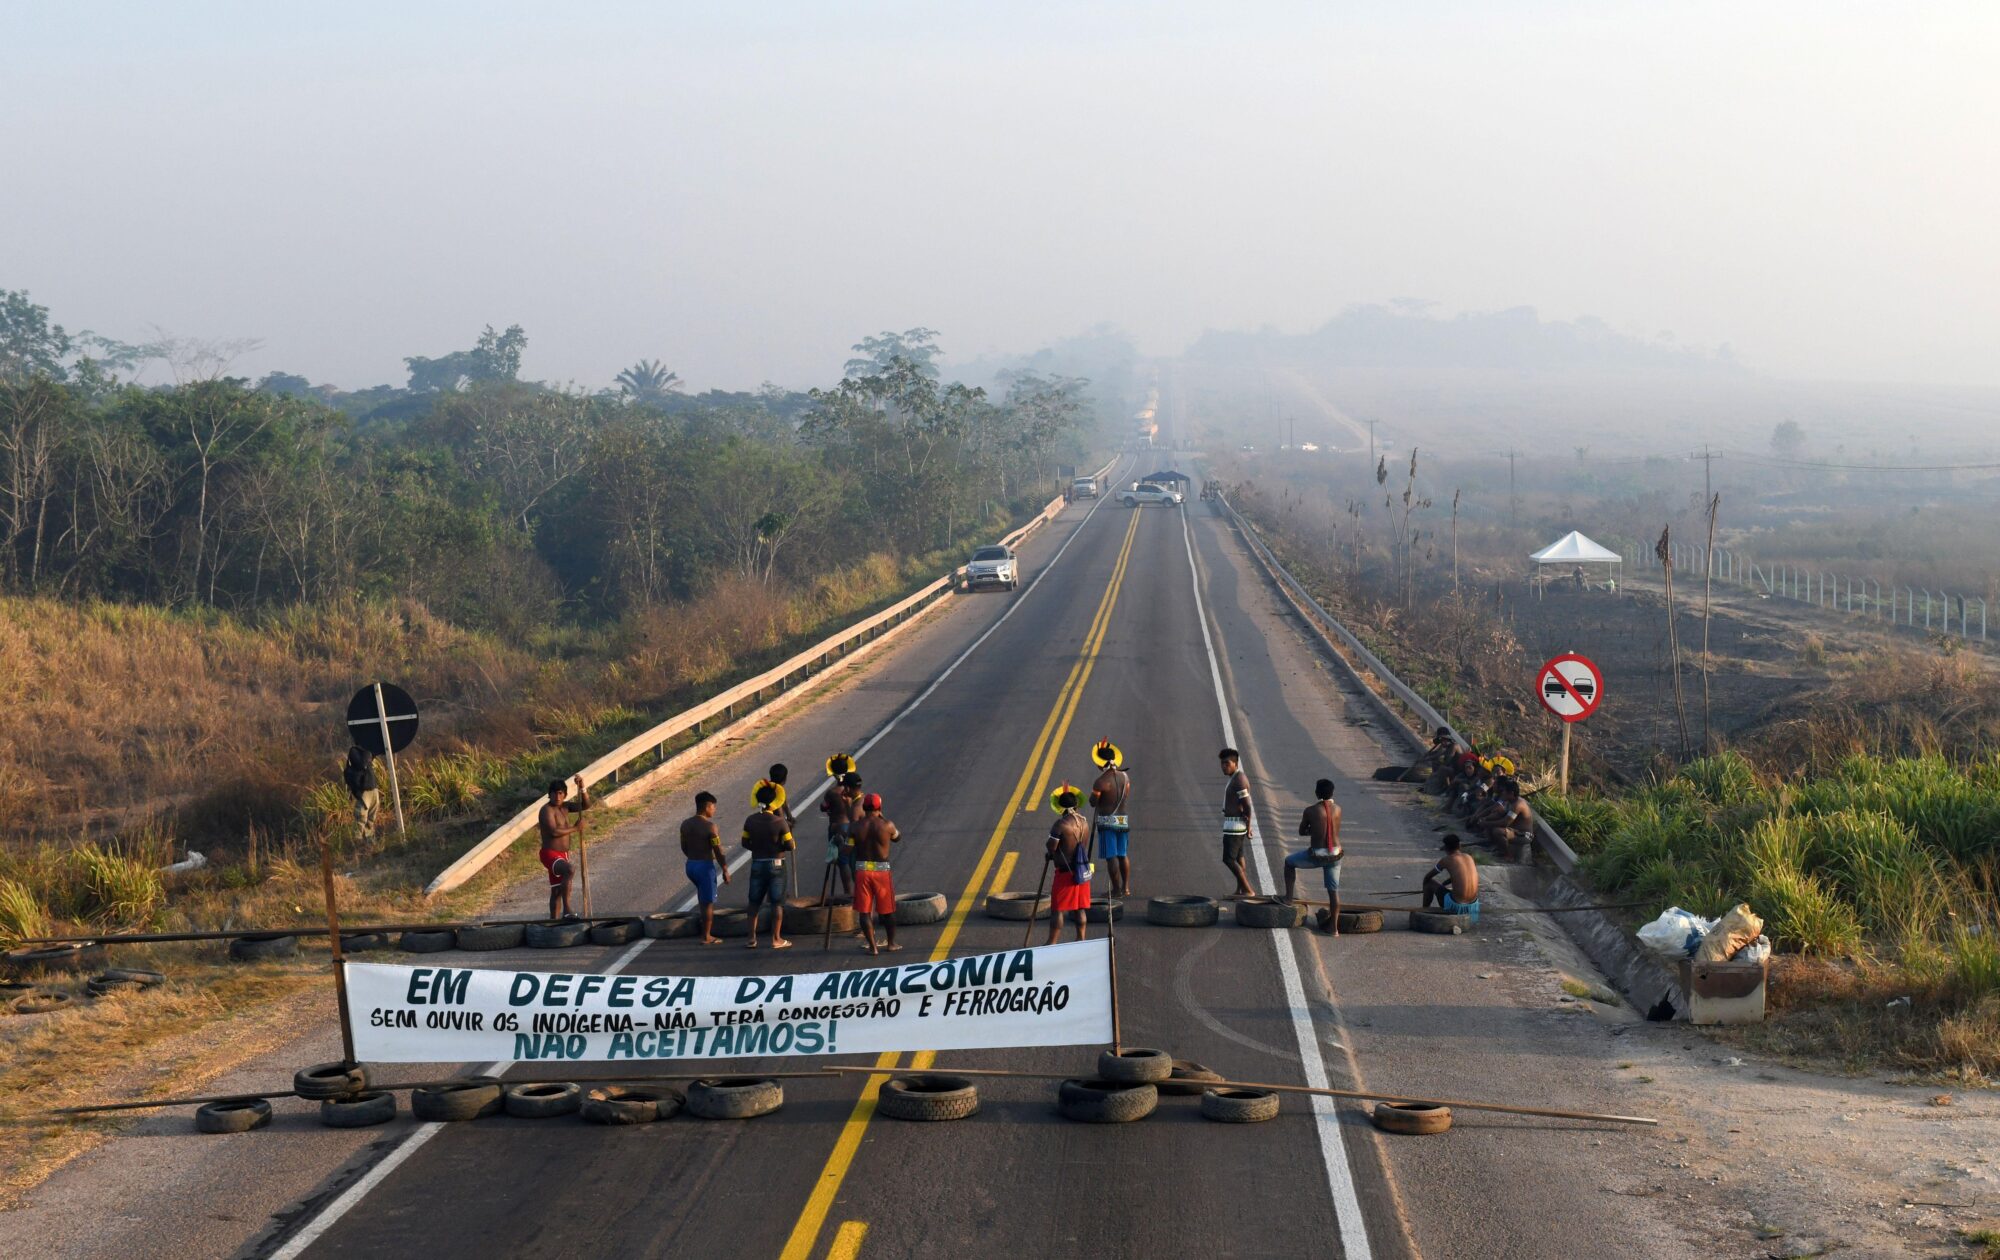 Grupo bloqueou a rodovia BR 163, no Pará, in Brazil